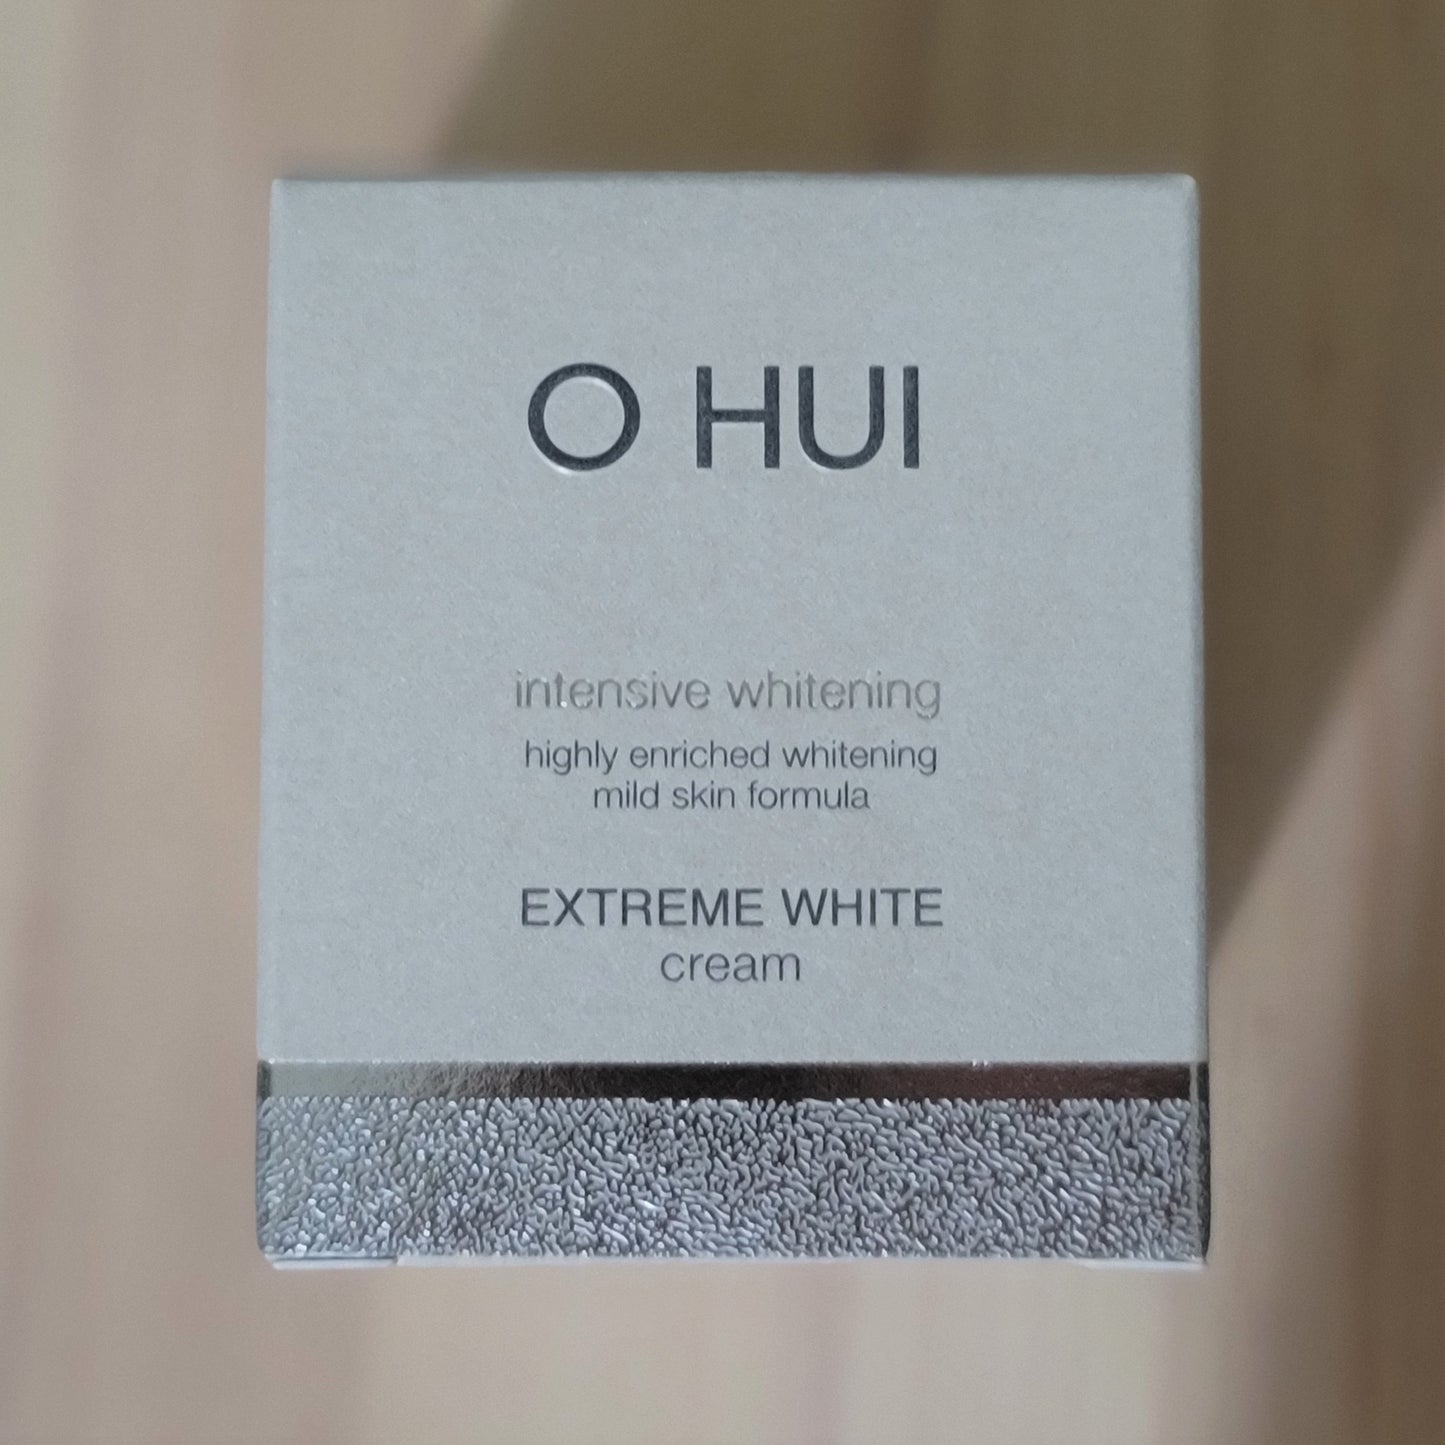 OHUI Extreme White Cream 50ml